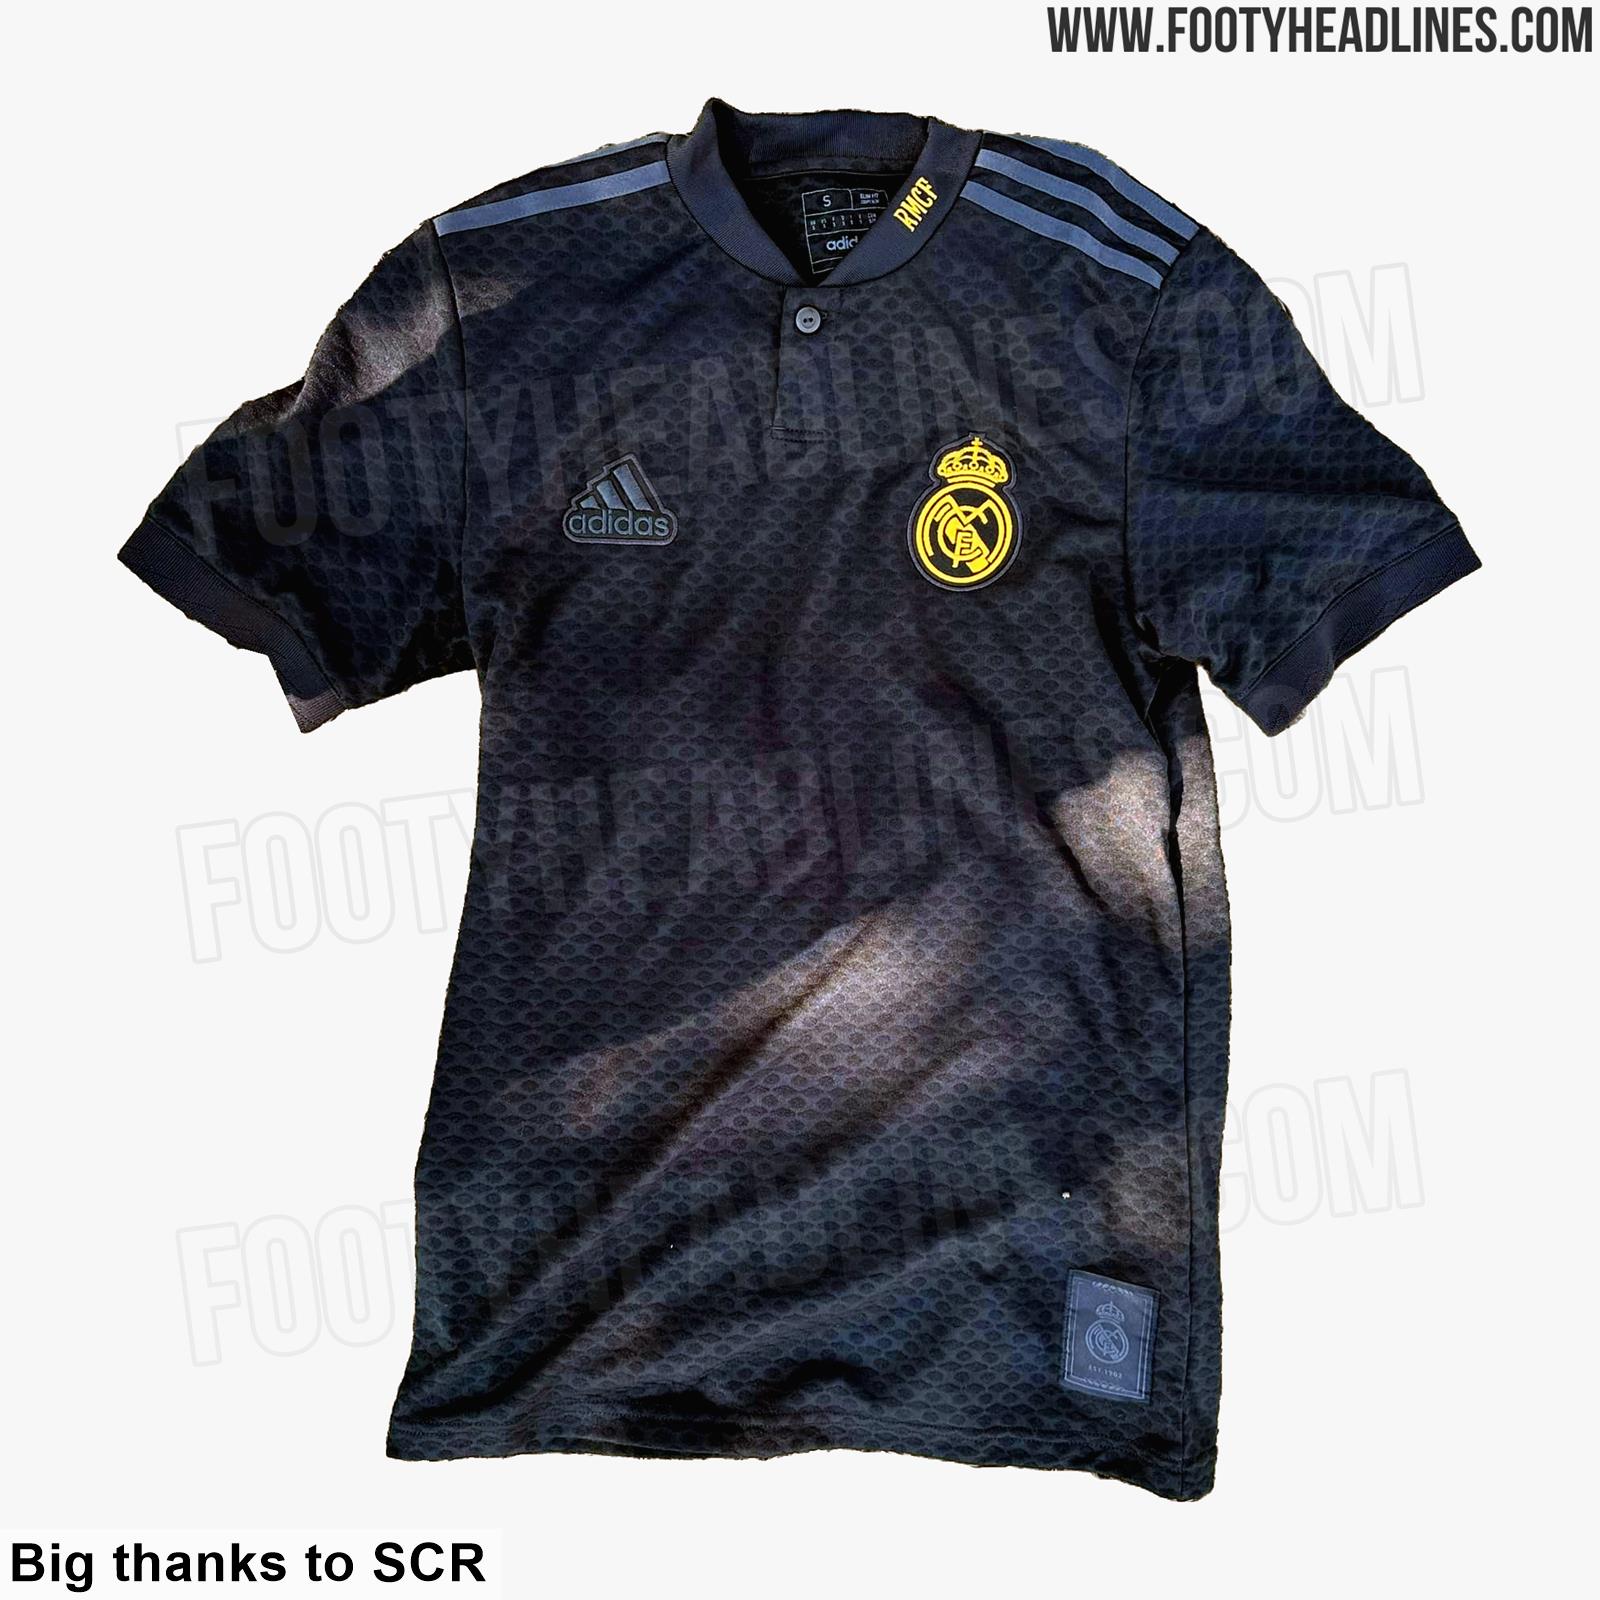 adidas Launch Real Madrid 22/23 Third Shirt - SoccerBible